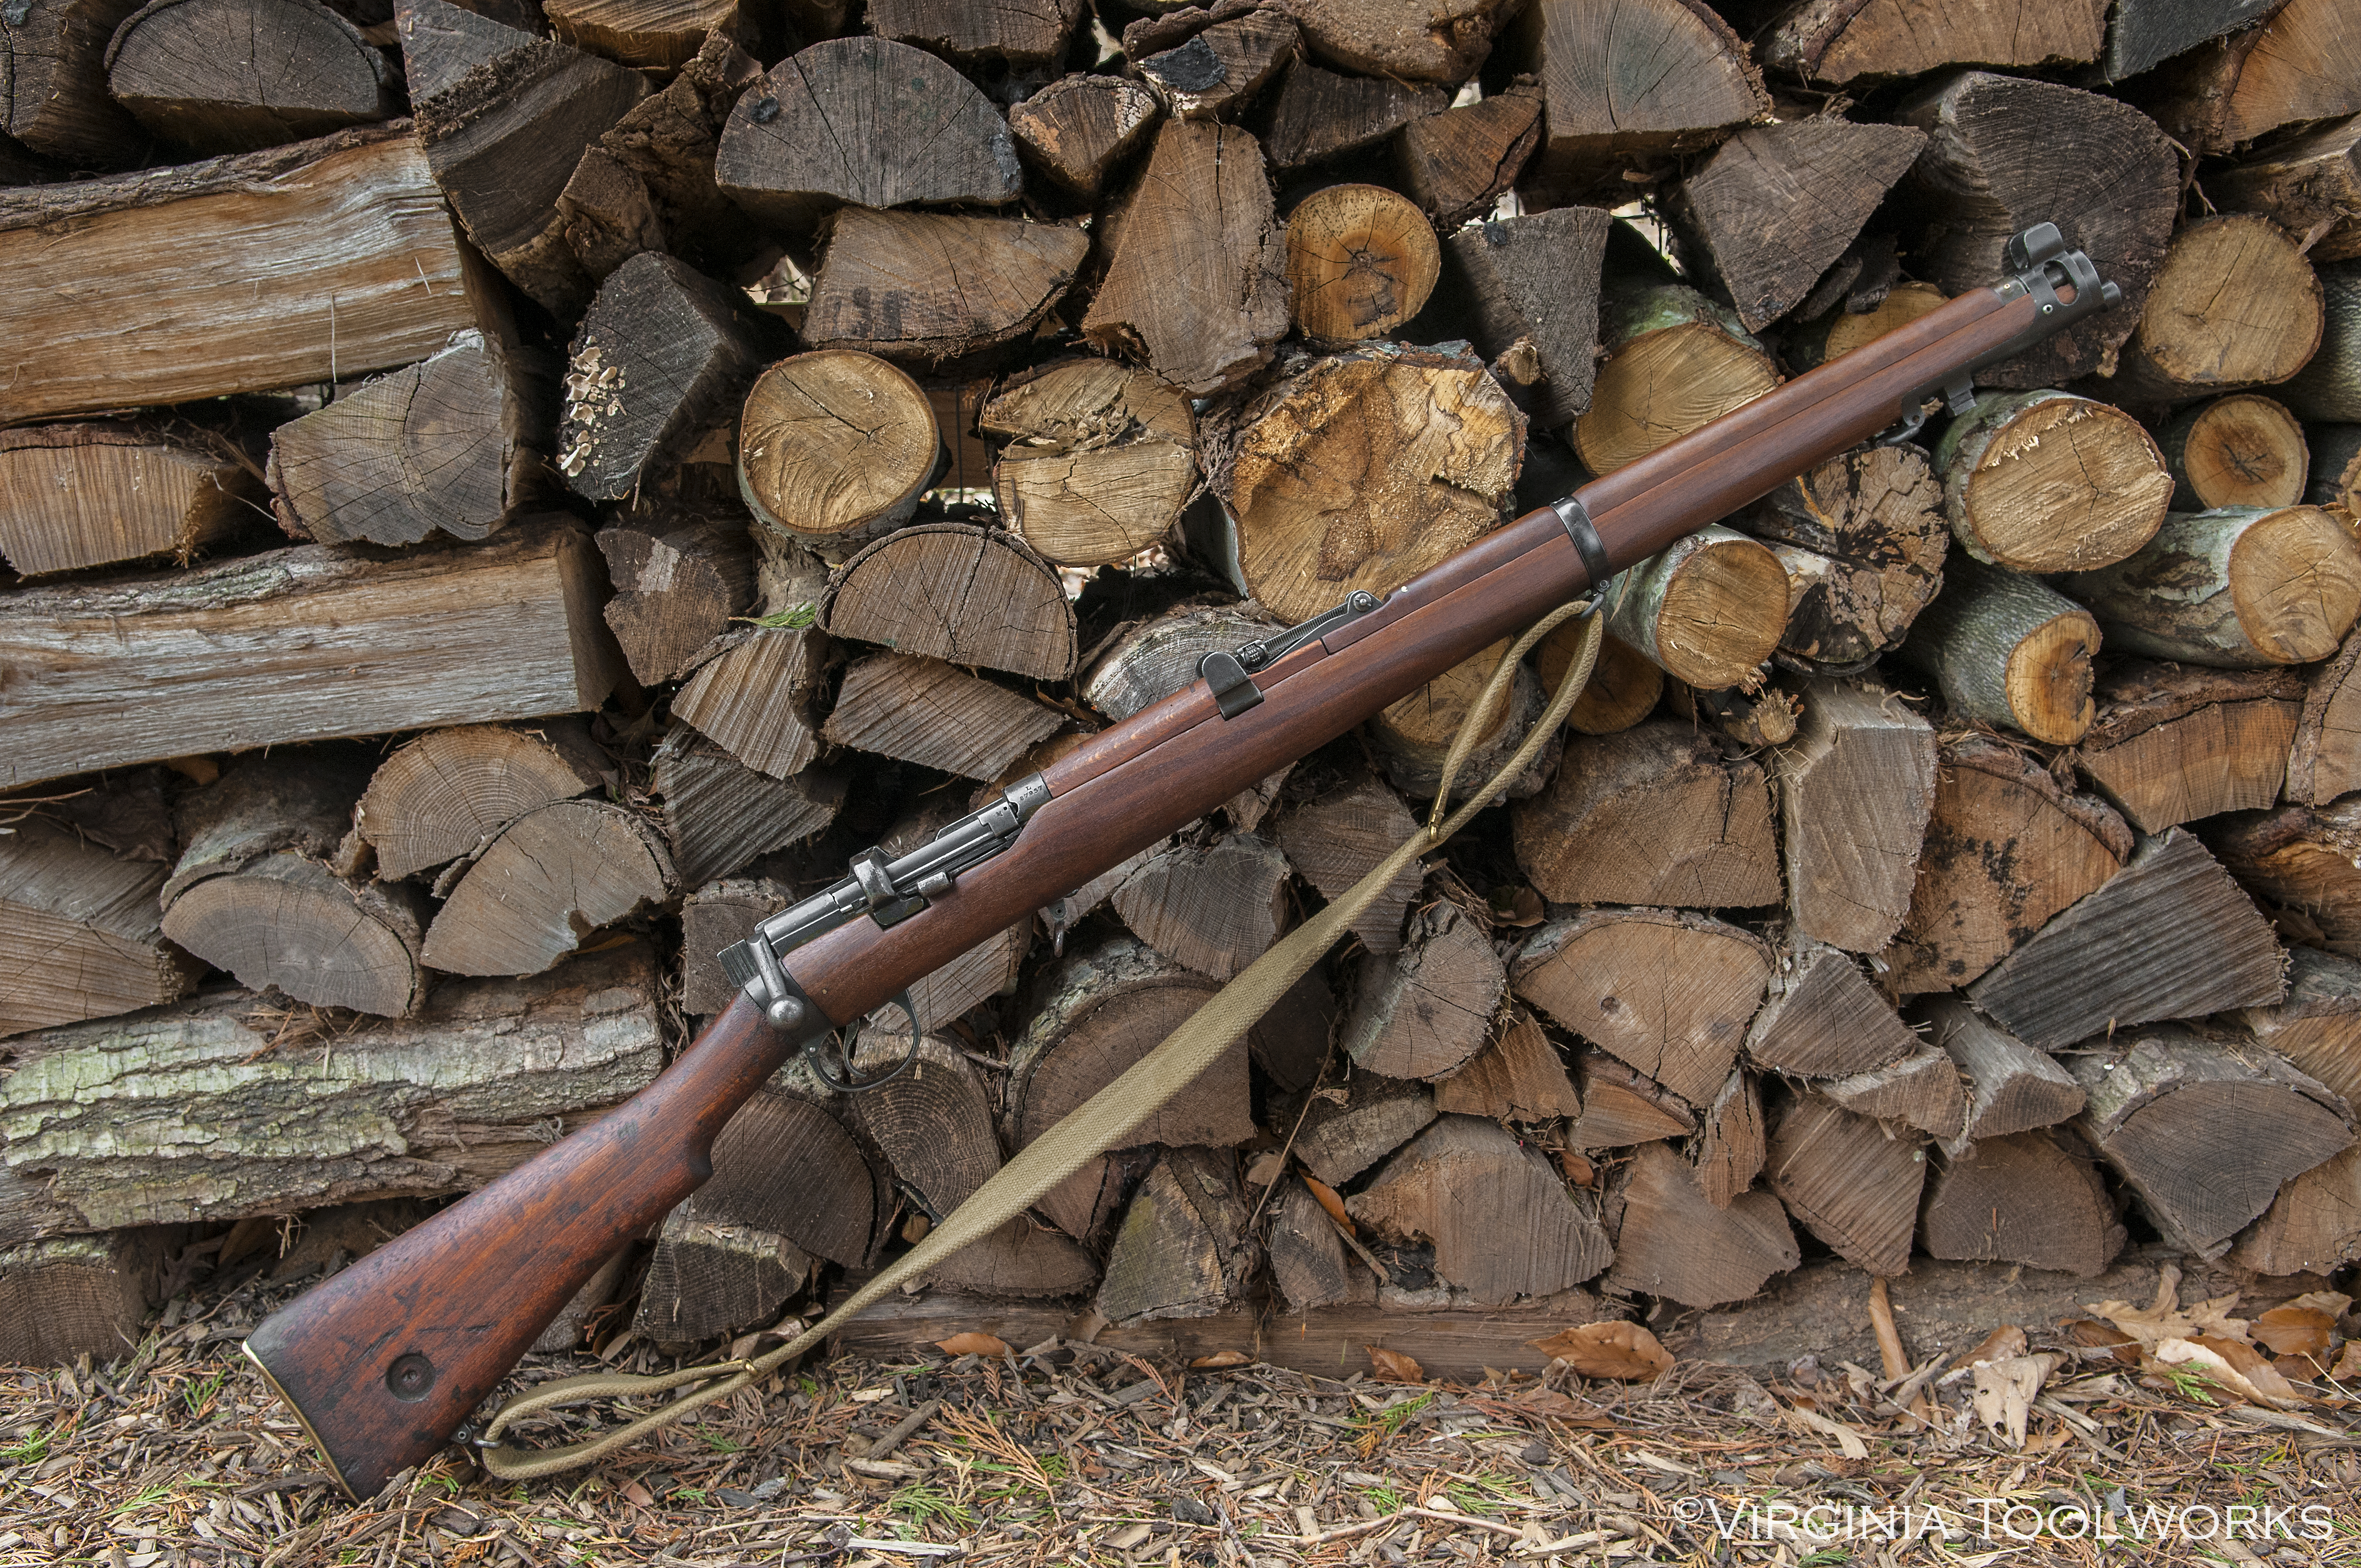 Favorite Firearms: A Lithgow No.1, Mk III* Lee-Enfield Club Rifle